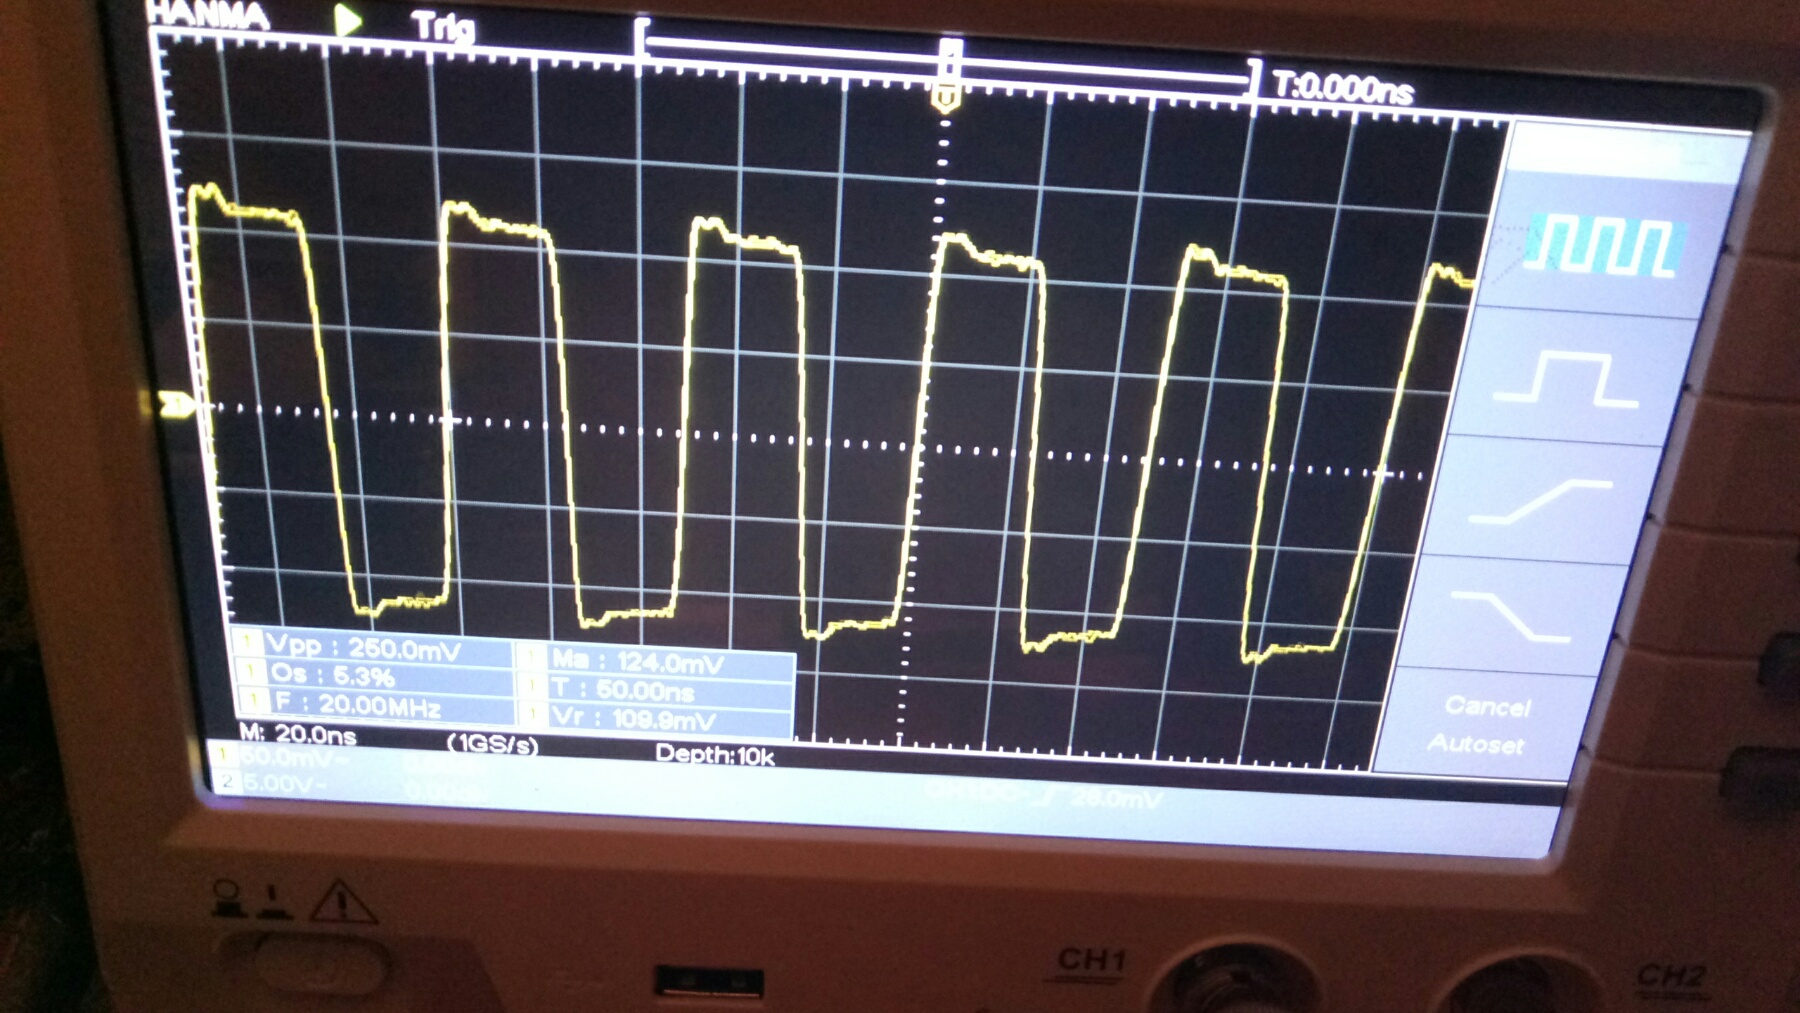 Hanmatek dos1102 - 20 mhz